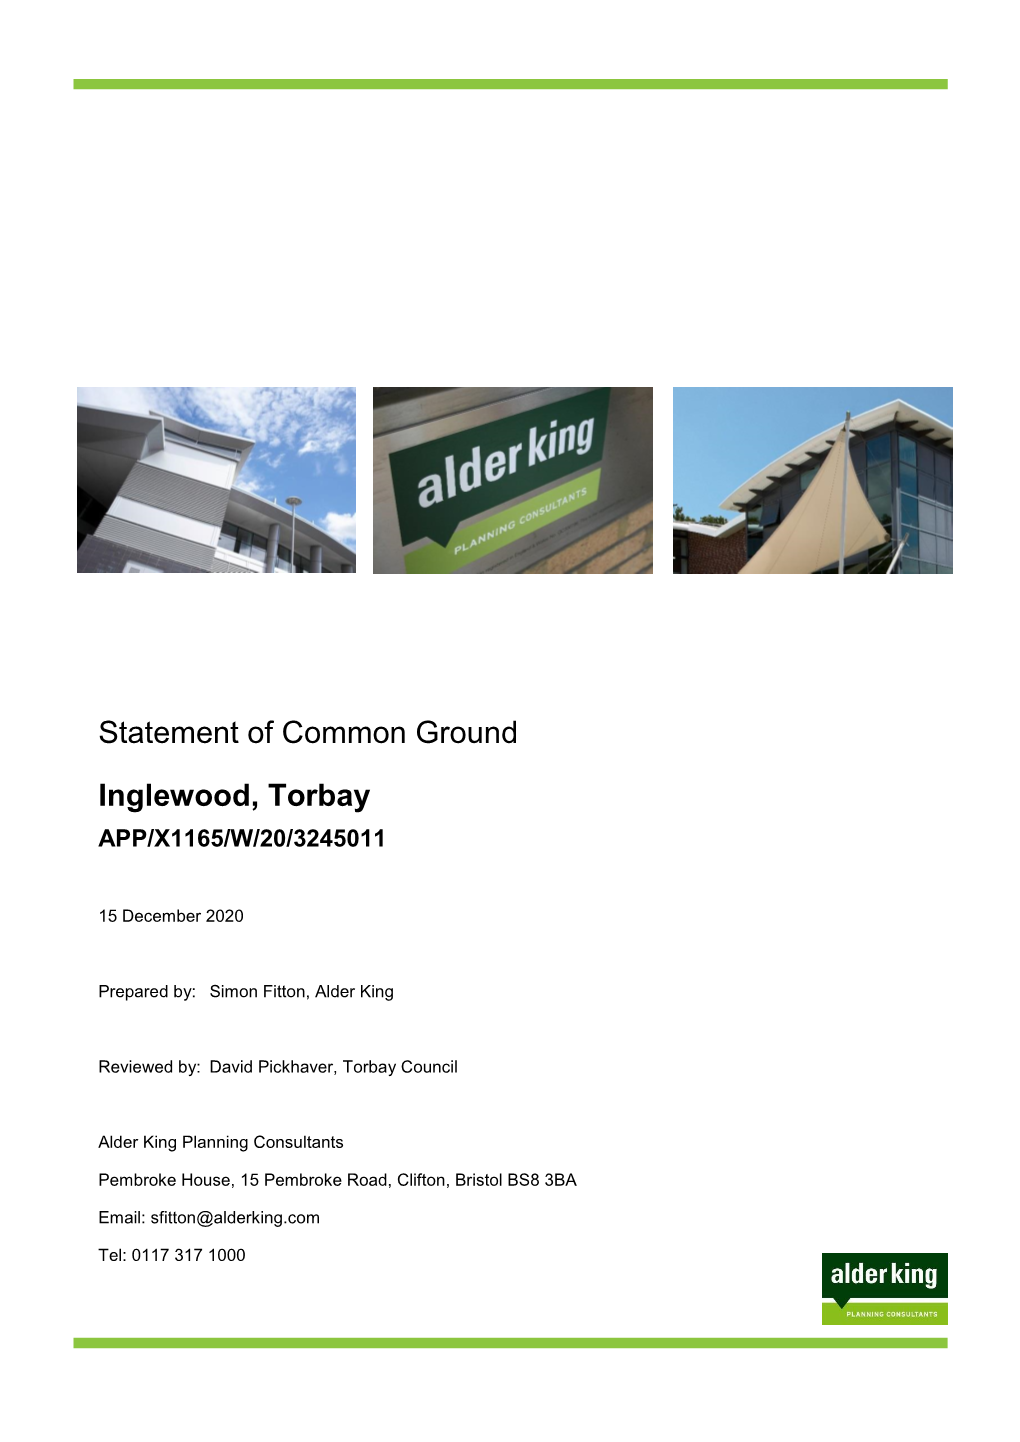 Statement of Common Ground Inglewood, Torbay